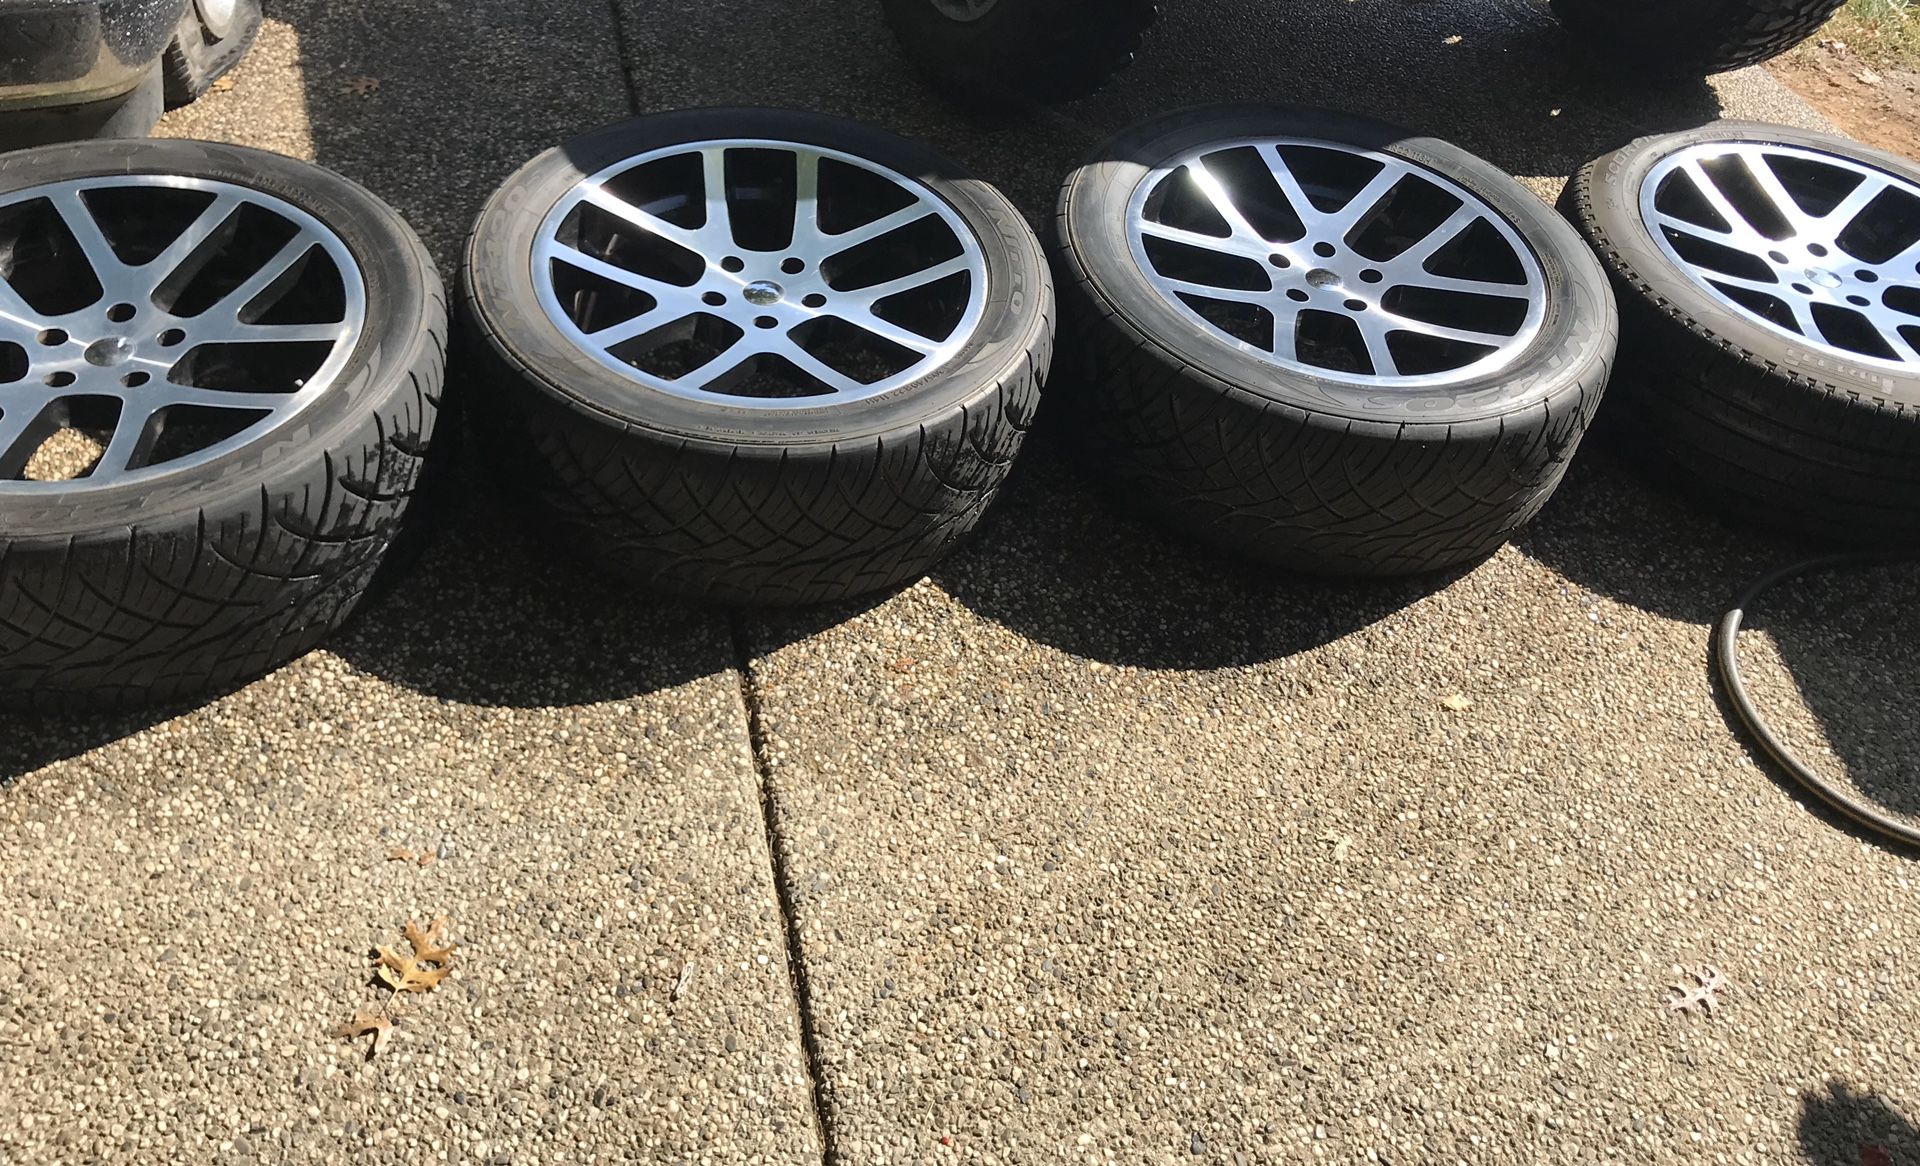 Srt replica 22” wheels and tires